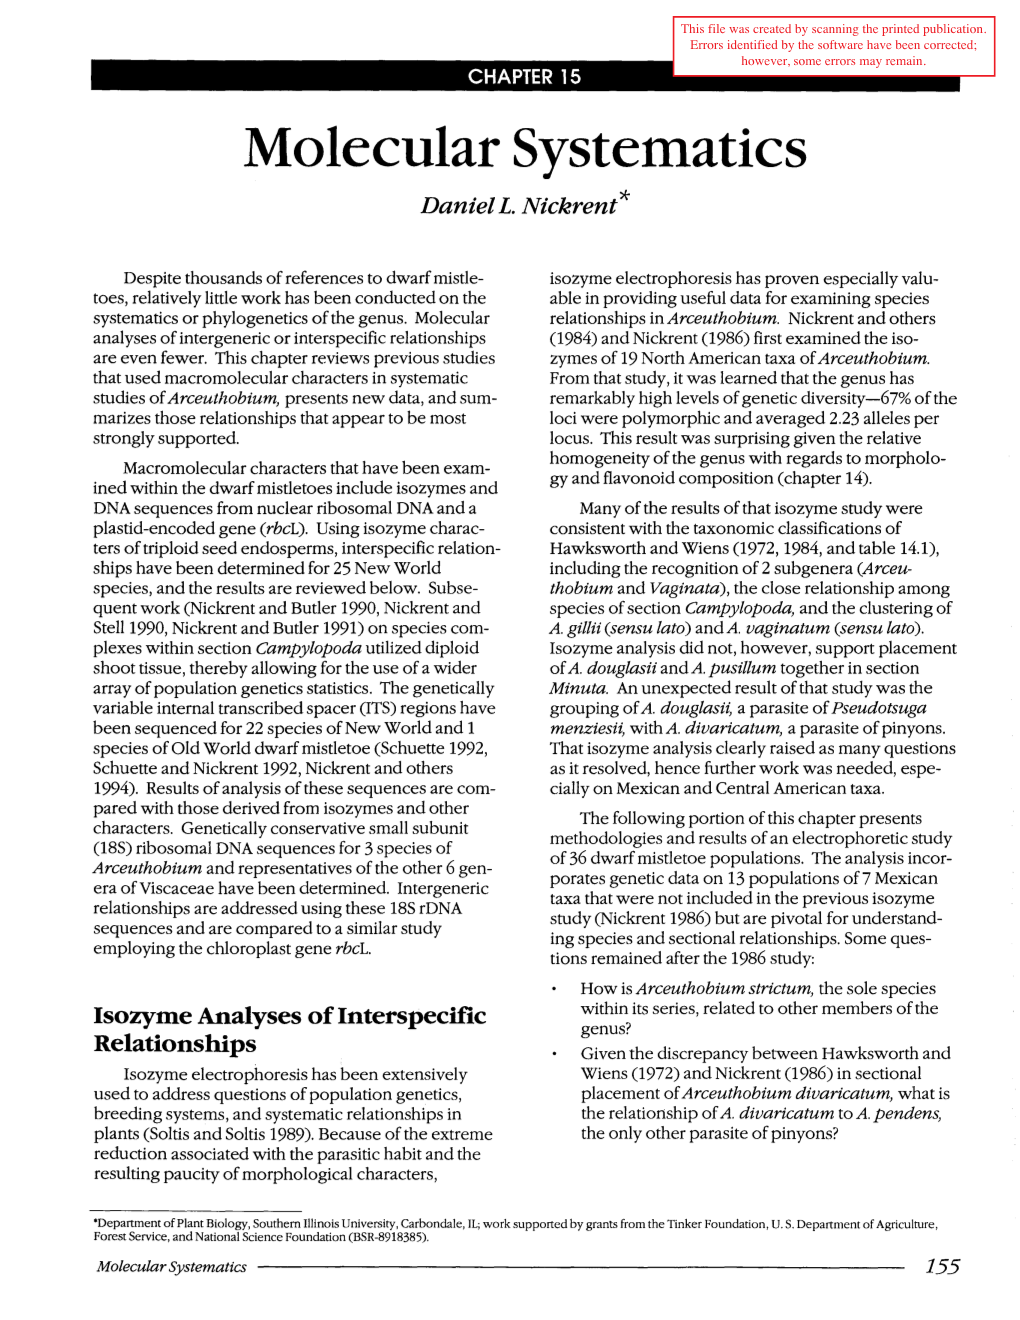 Molecular Systematics Daniel L